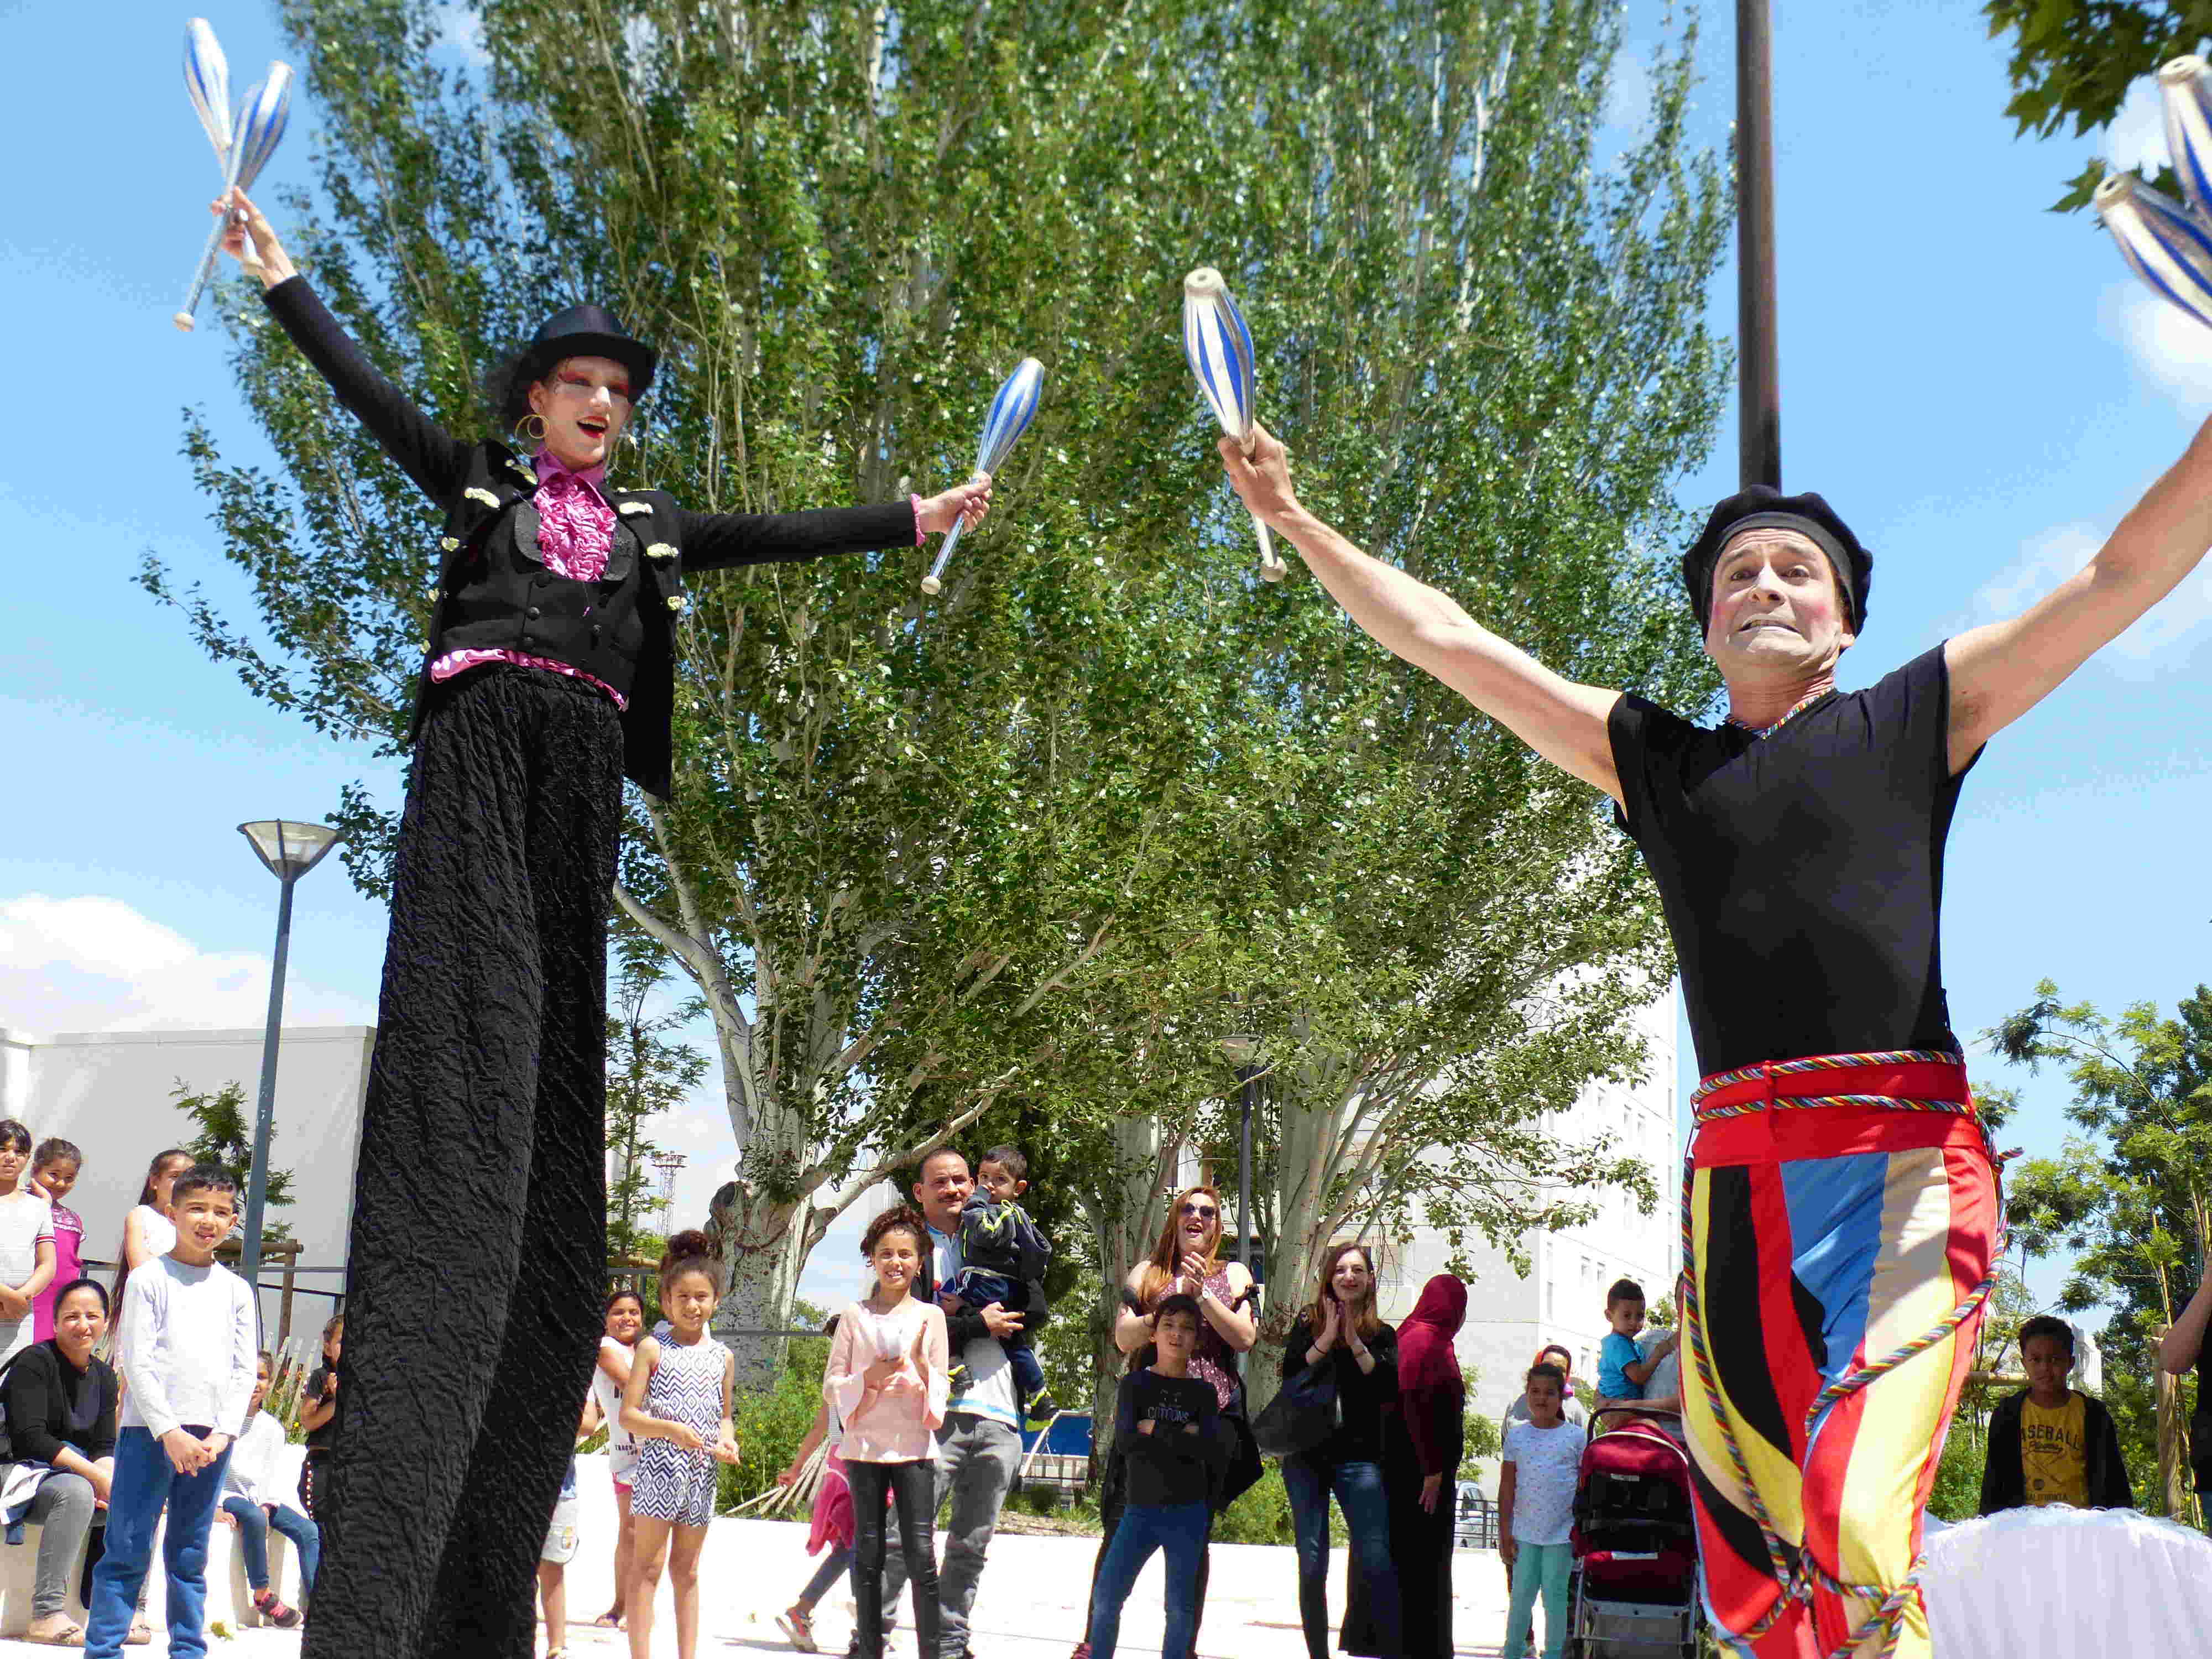 Spectacle de rue des échassiers et jongleurs de cirque indigo en PACA